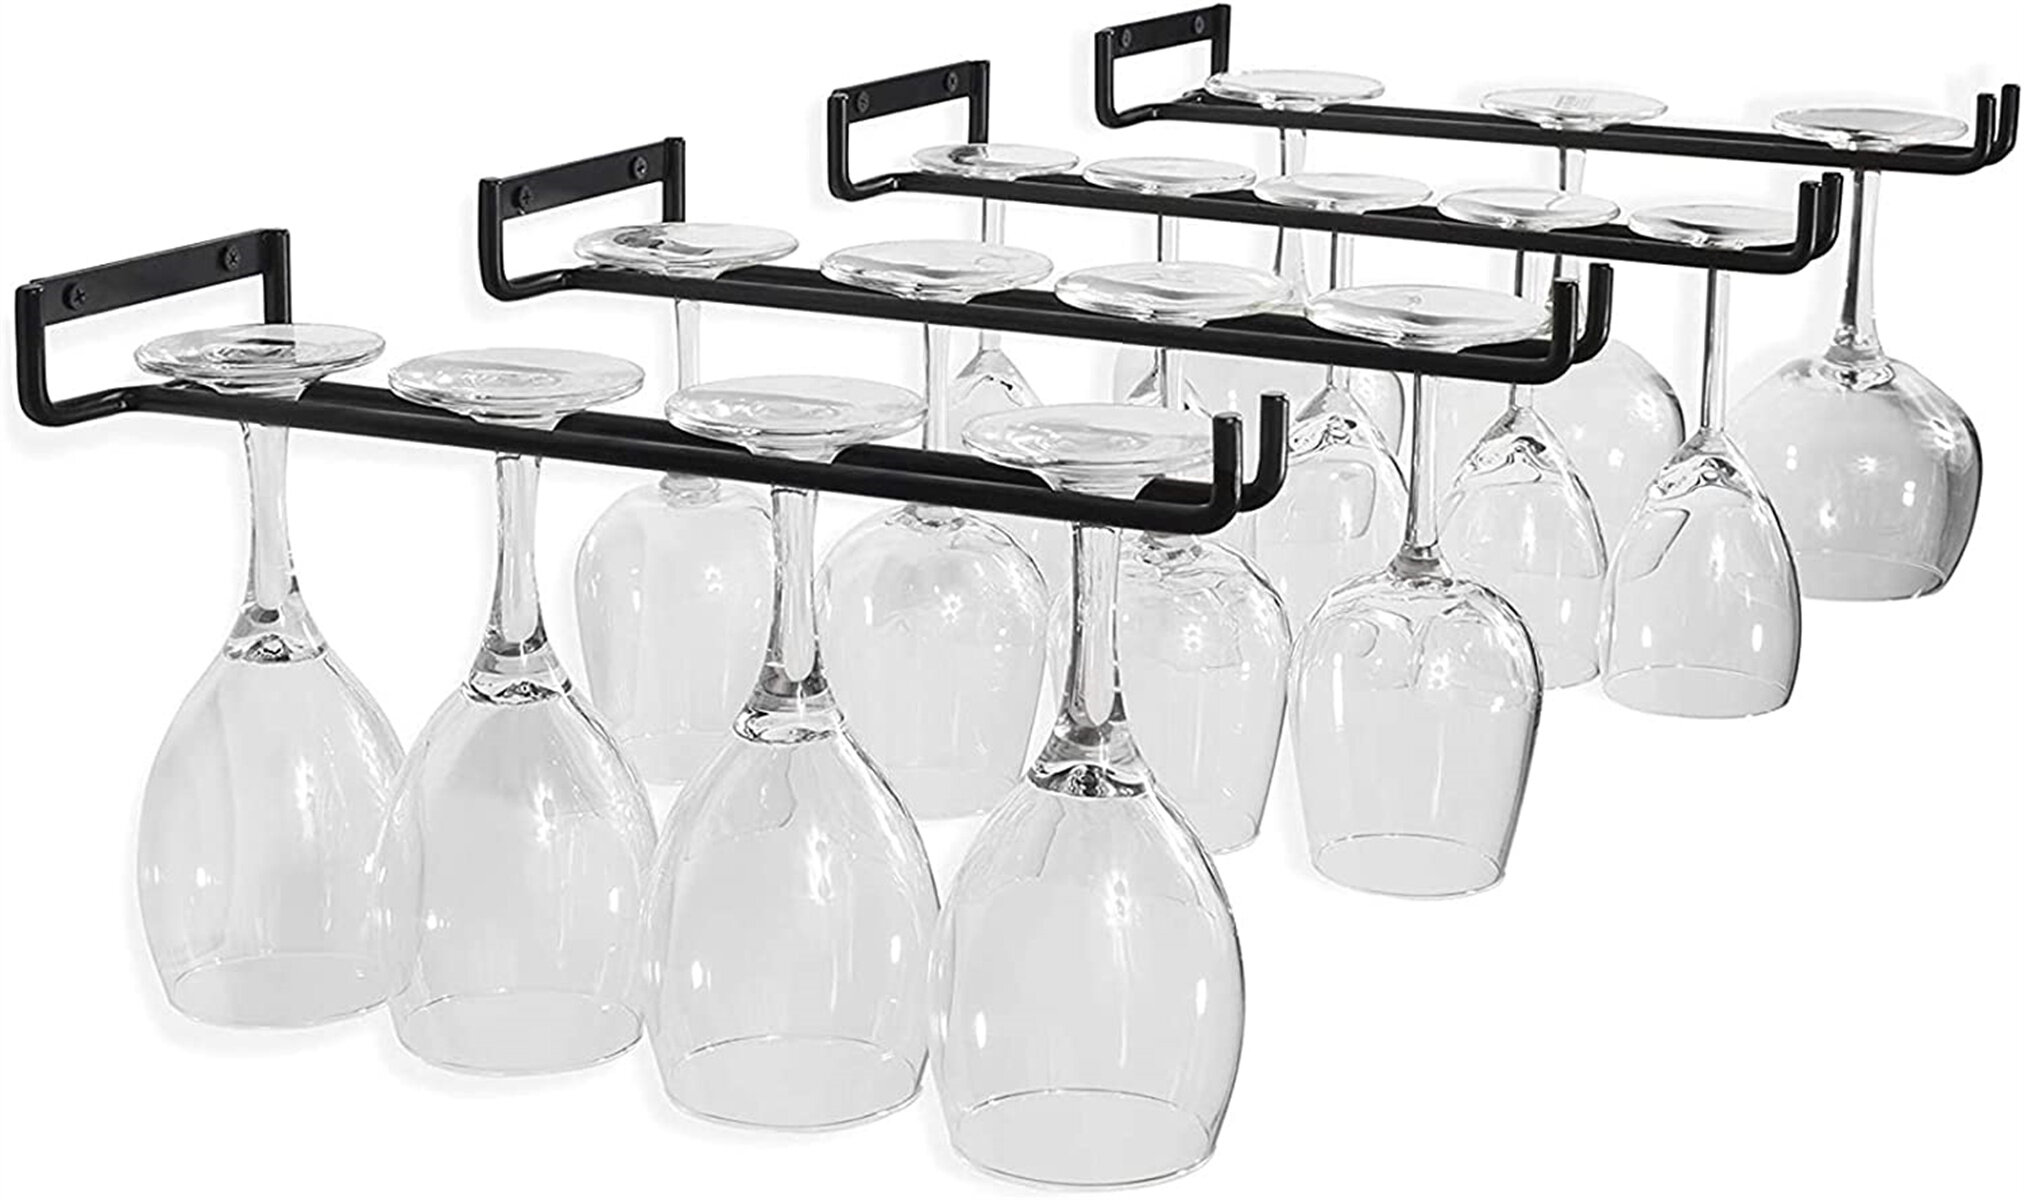 Single Layer Organizer Stemware Wine Glass Rack Bar Holder Under Cabinet Hanging